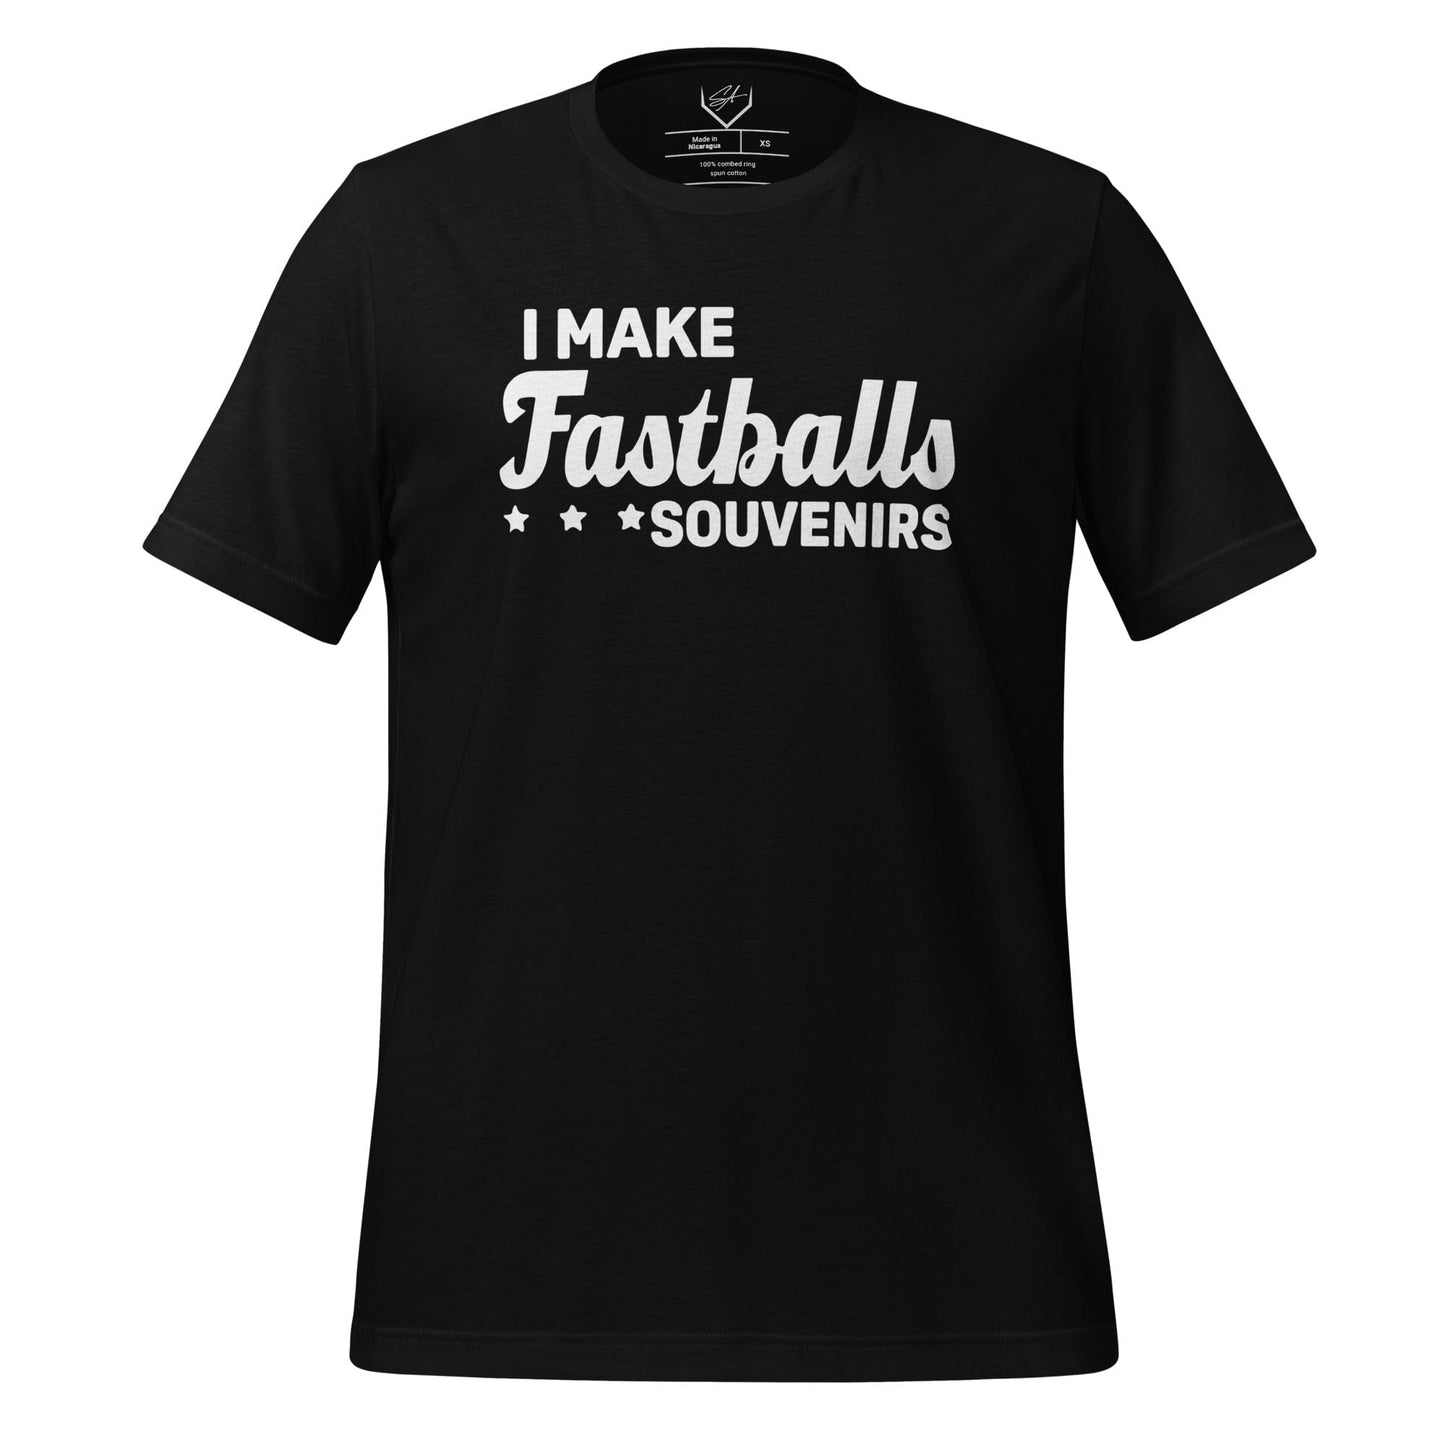 I Make Fastballs Souvenirs - Adult Tee